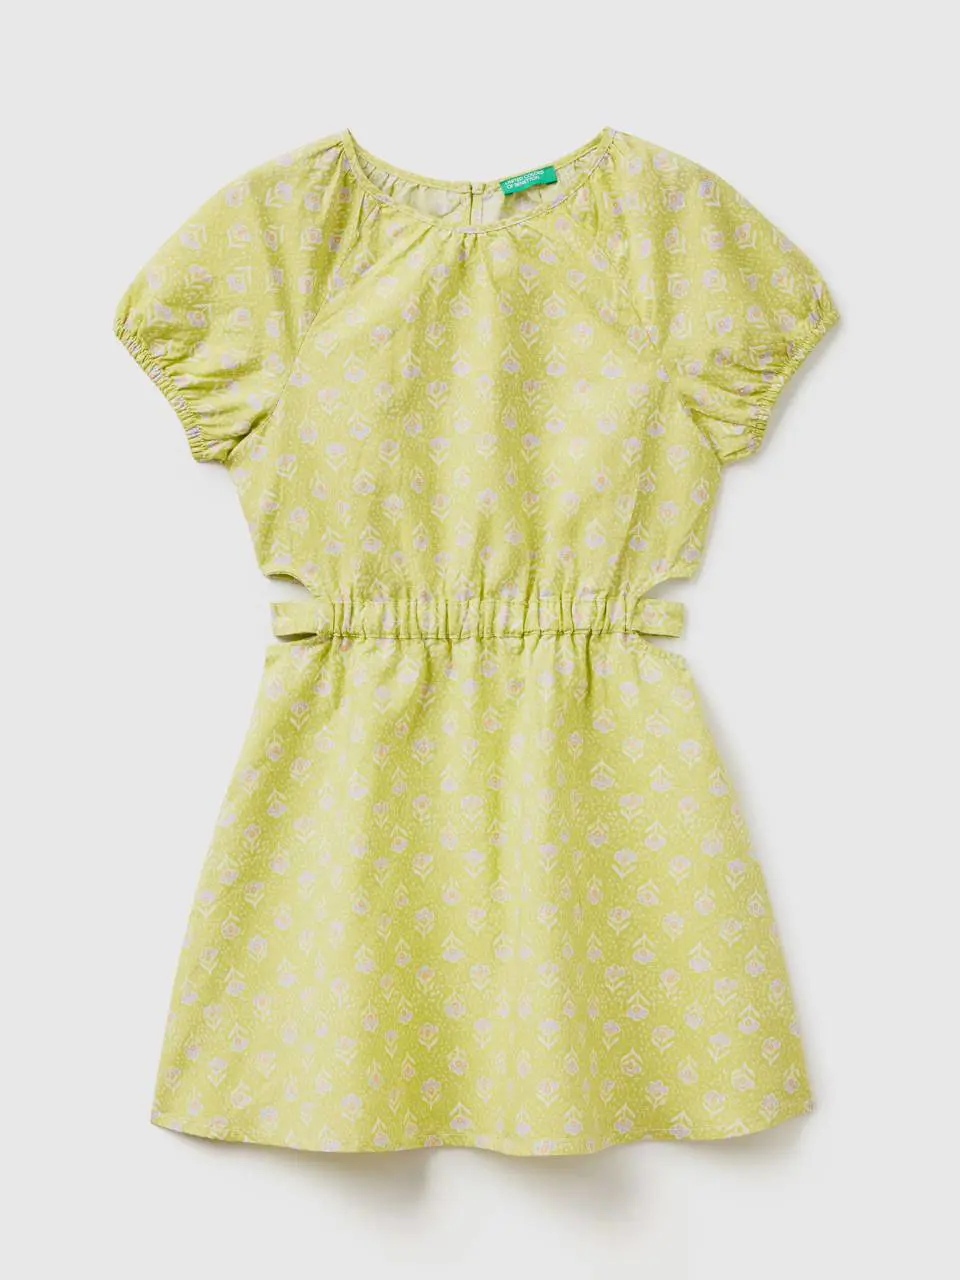 Benetton patterned dress in linen blend. 1